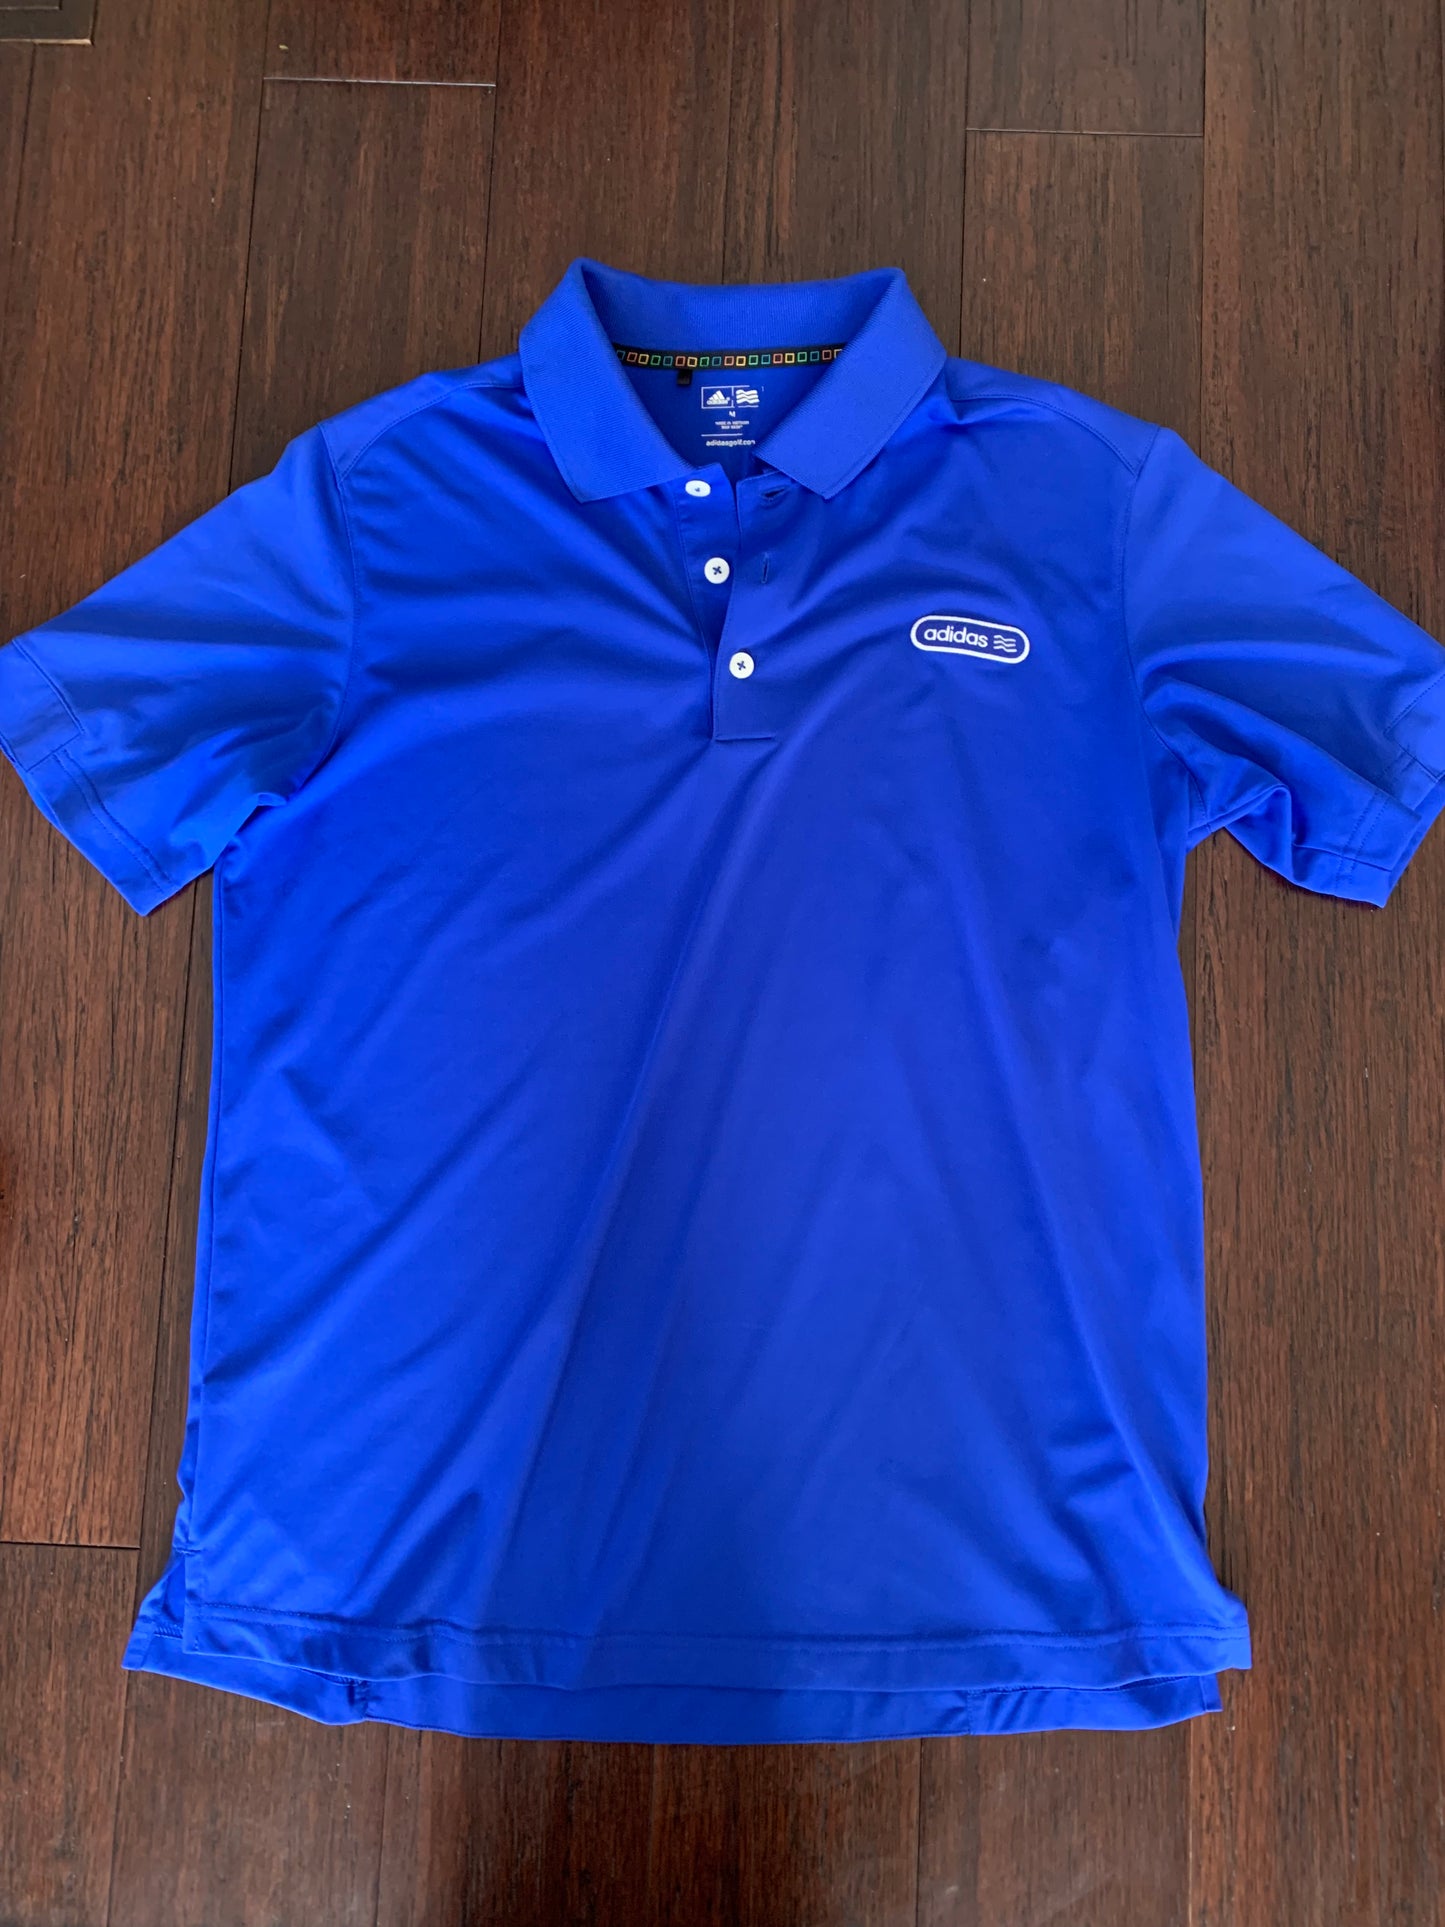 Adidas Dry Fit Golf Shirt, Blue, Men’s M